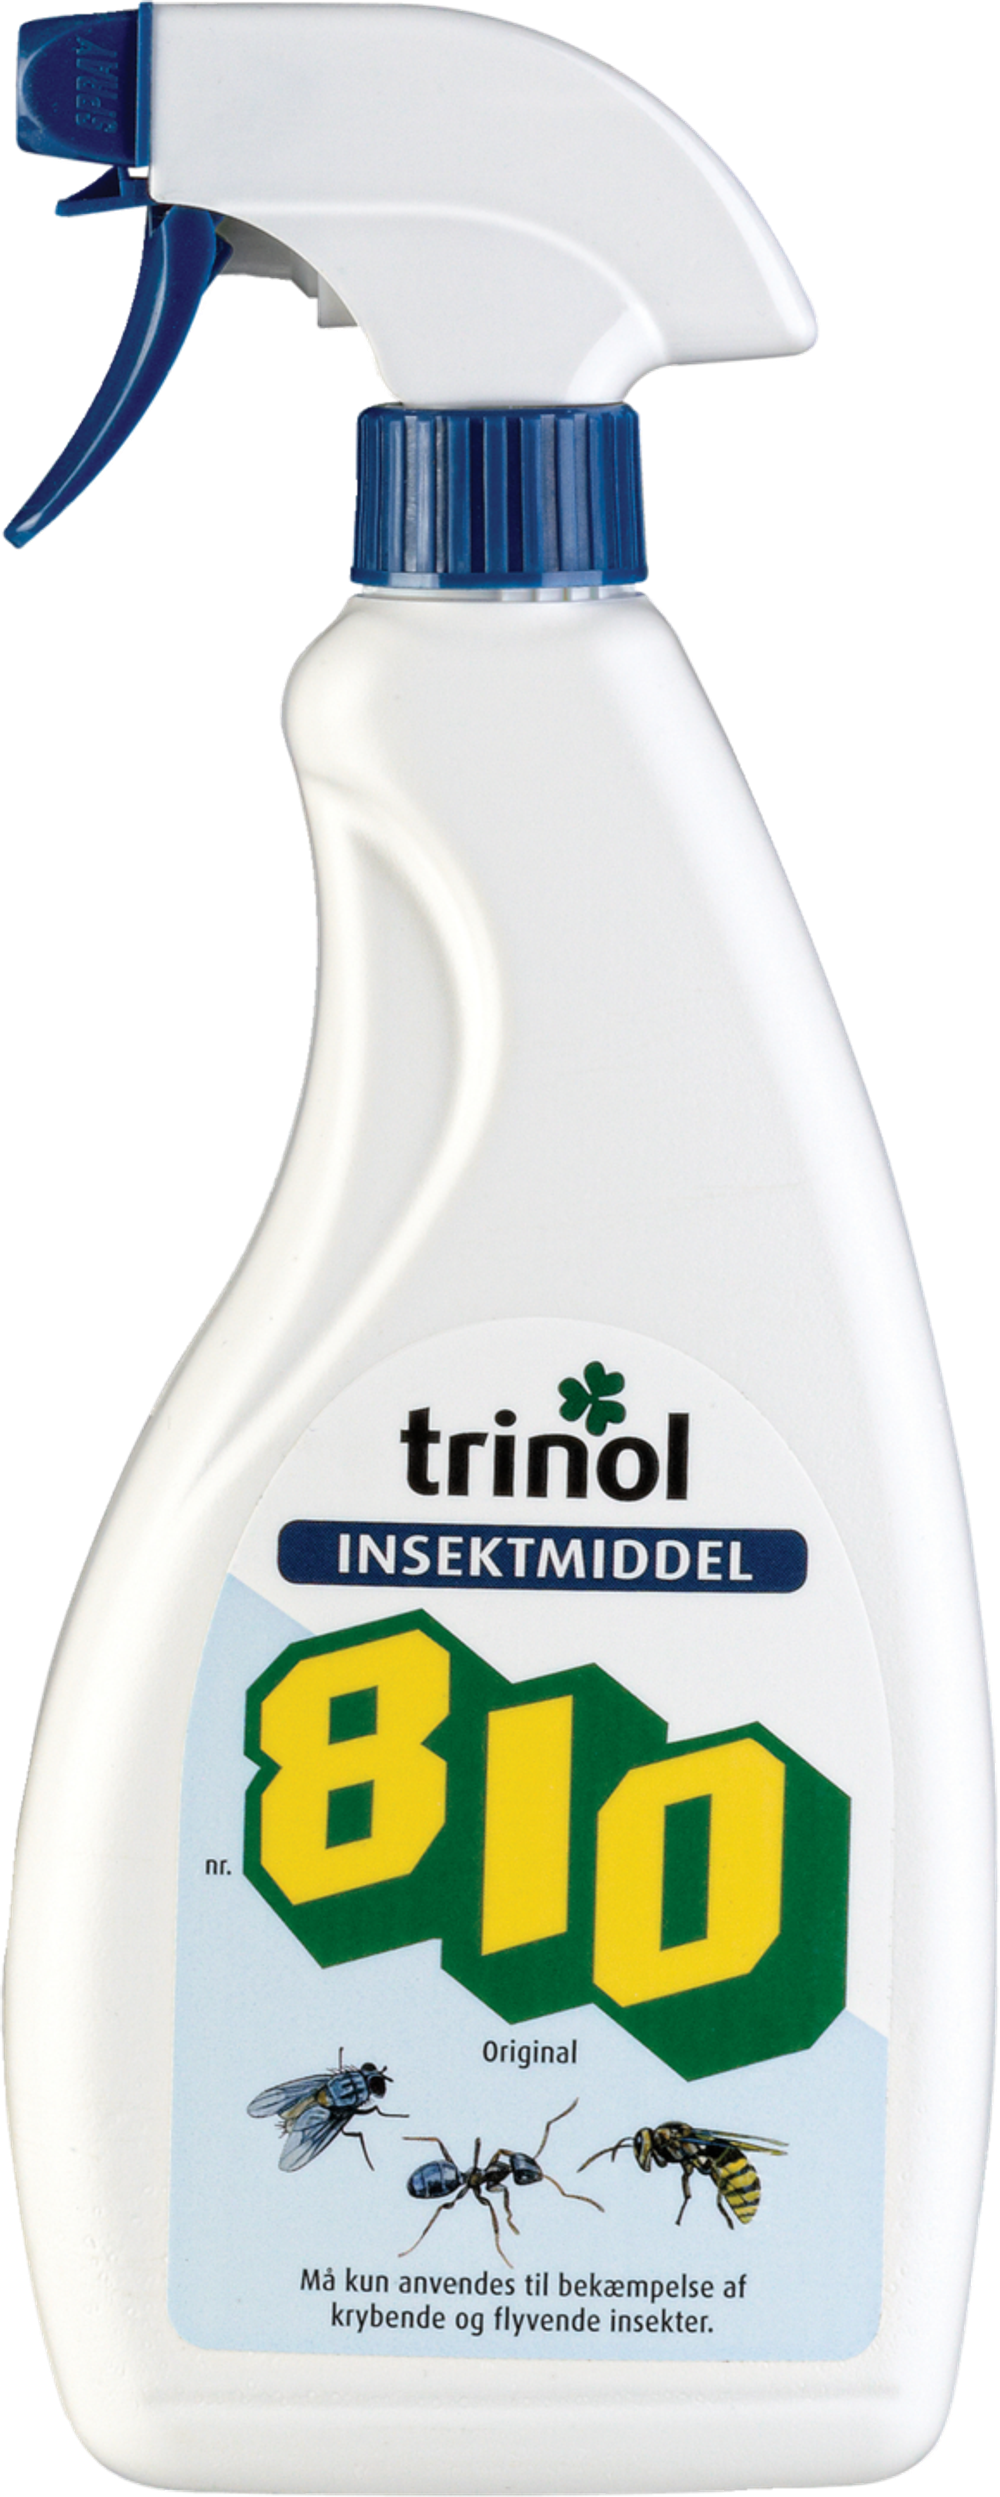 Tilbud på Trinol 810 Insektsmiddel fra Davidsen til 165 kr.